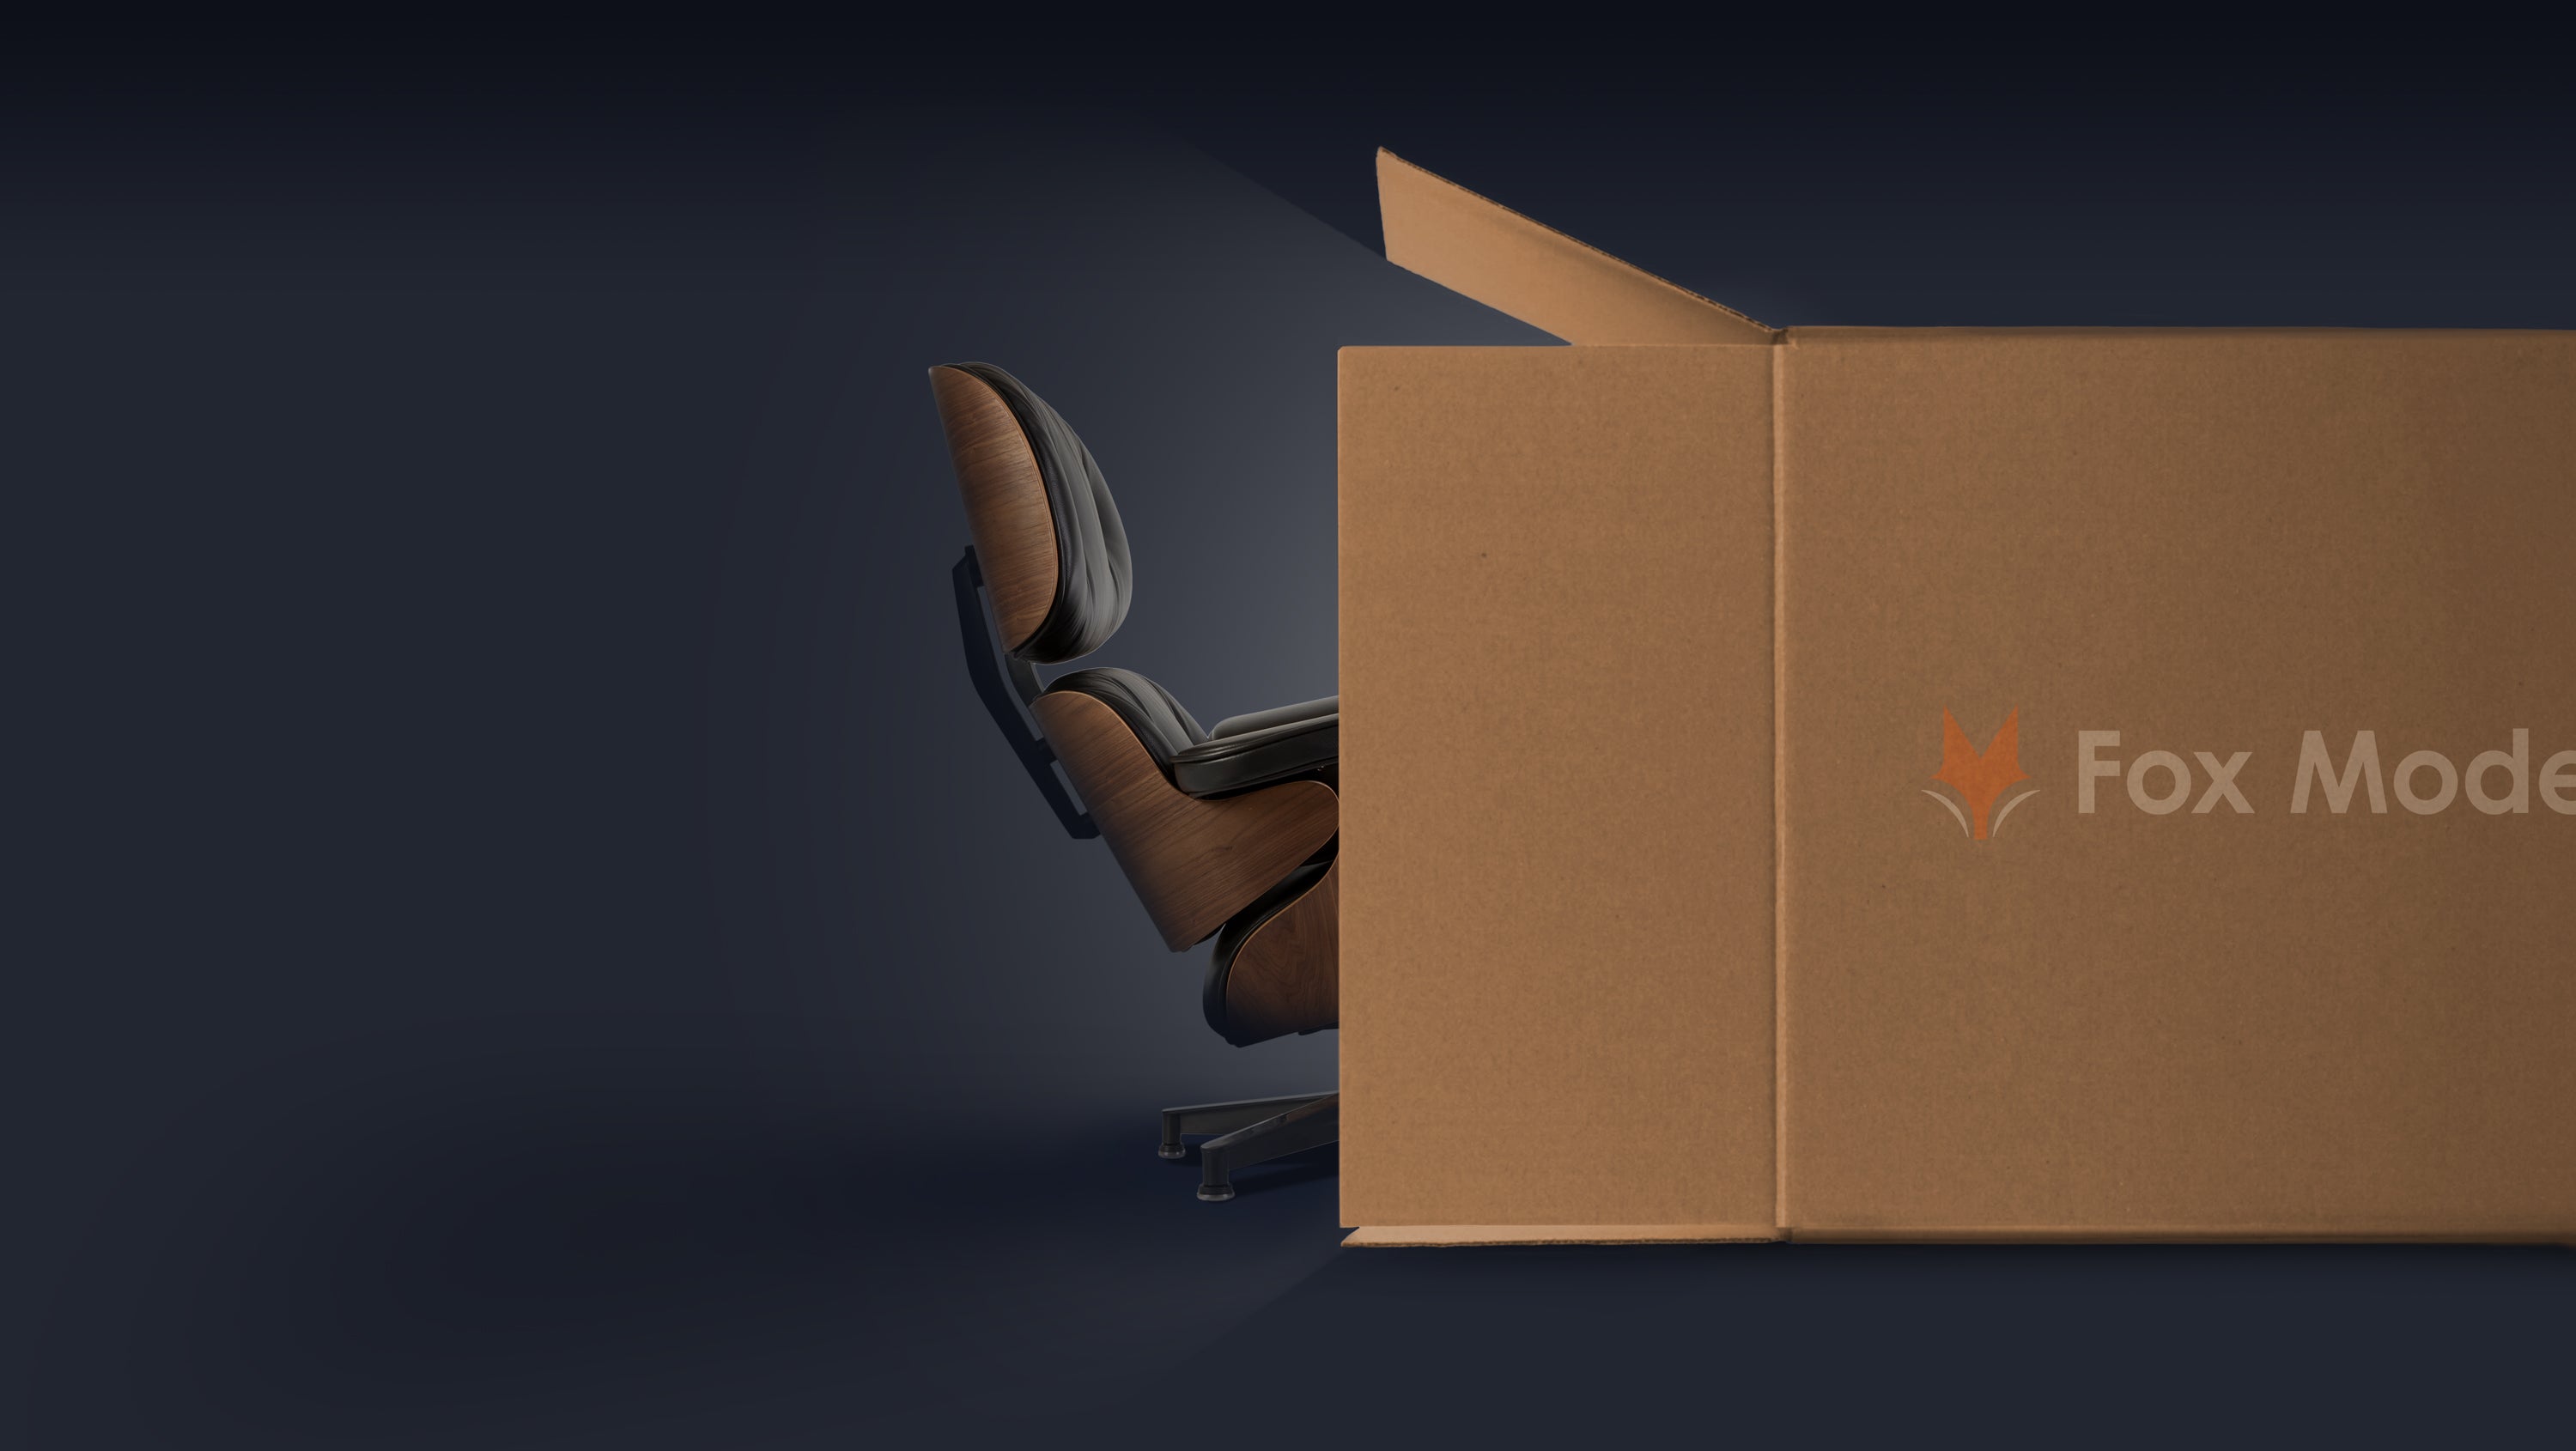 An image displaying a black Eames Lounge Chair half inside a Fox Modern branded cardboard box